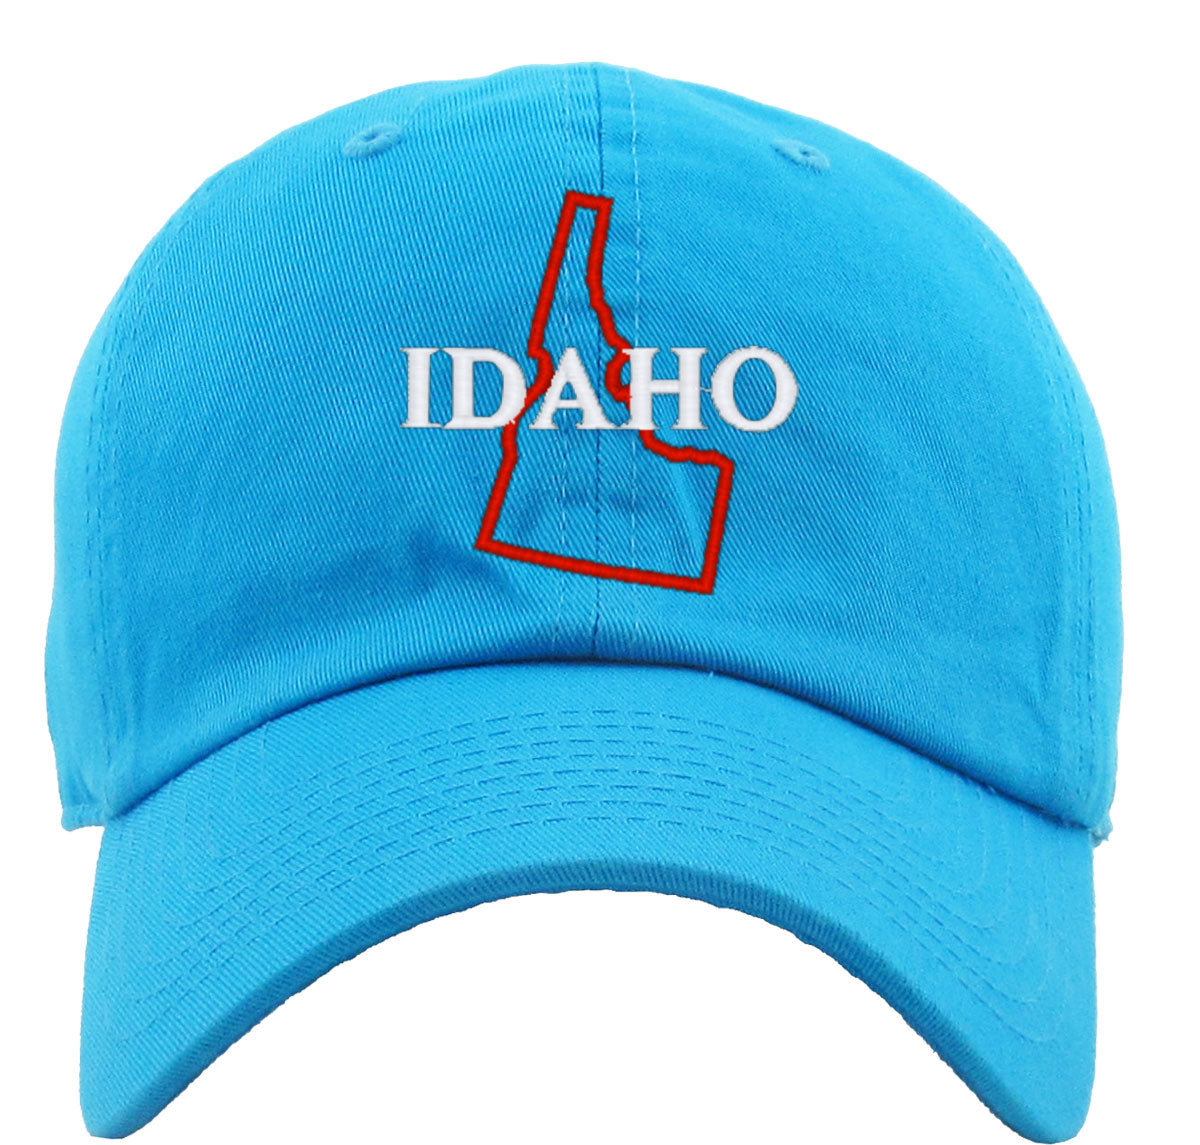 Idaho Premium Baseball Cap